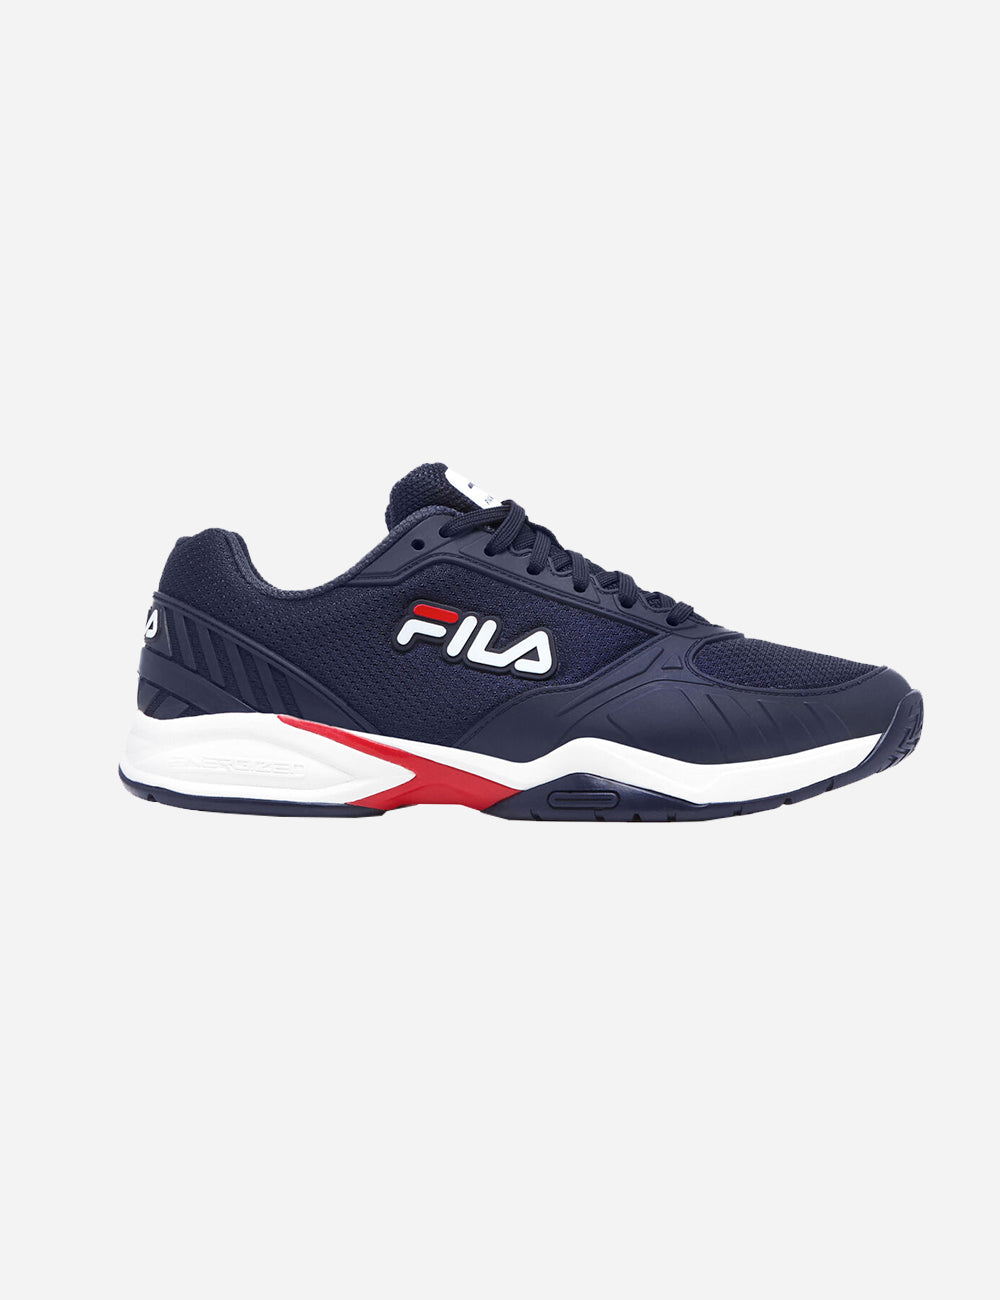 FILA Volley Zone Men's Pickleball Shoe